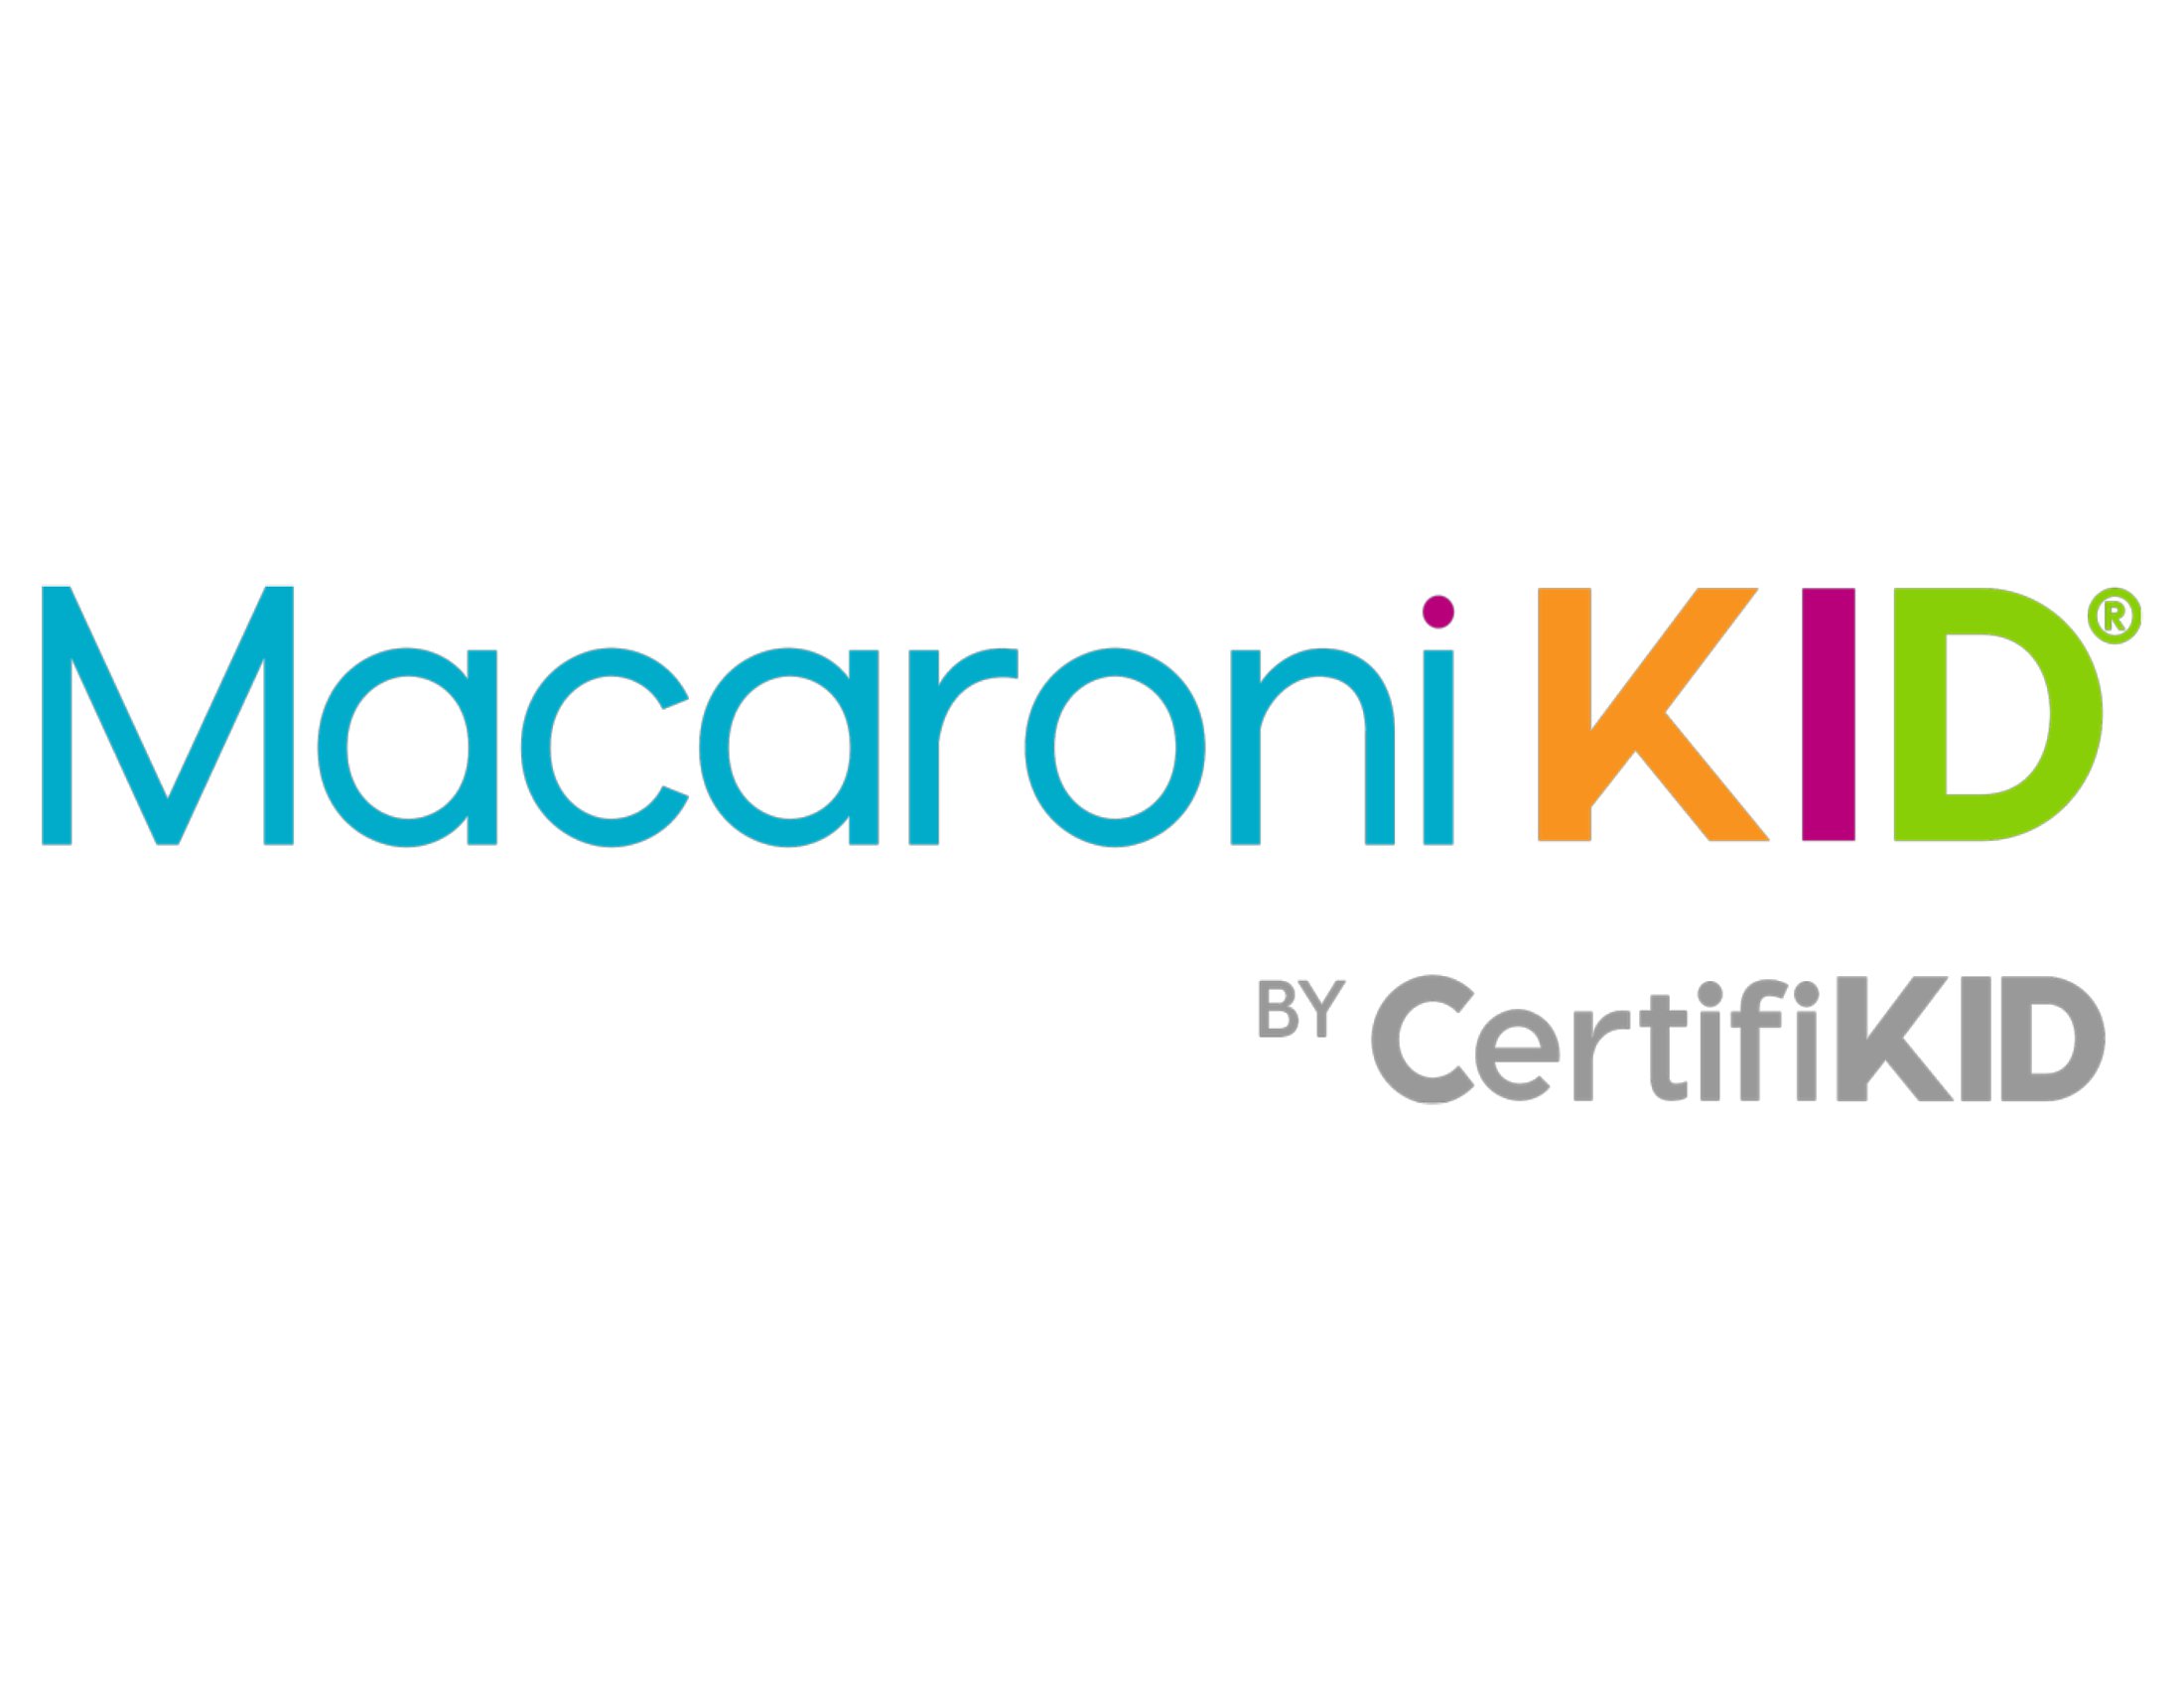 Macaroni Kids logo small